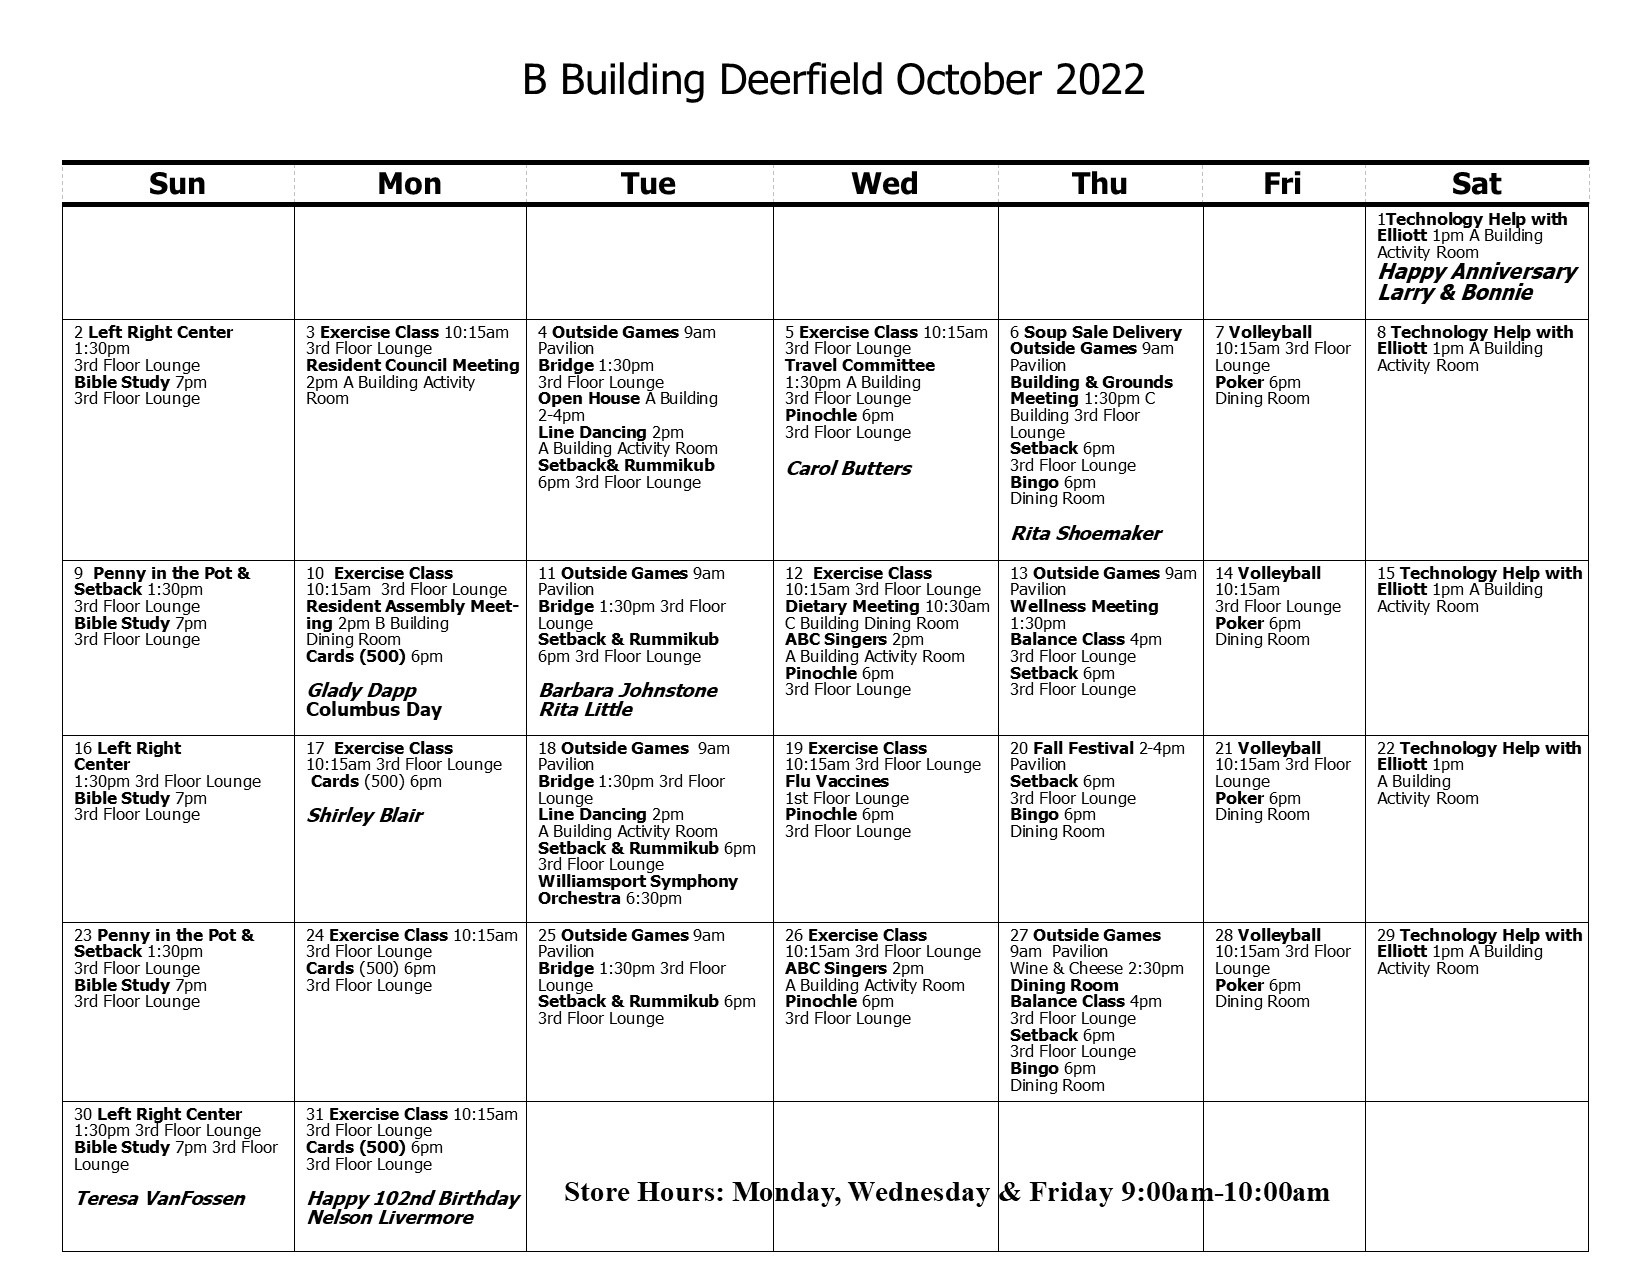 B Building Calendar October 2022